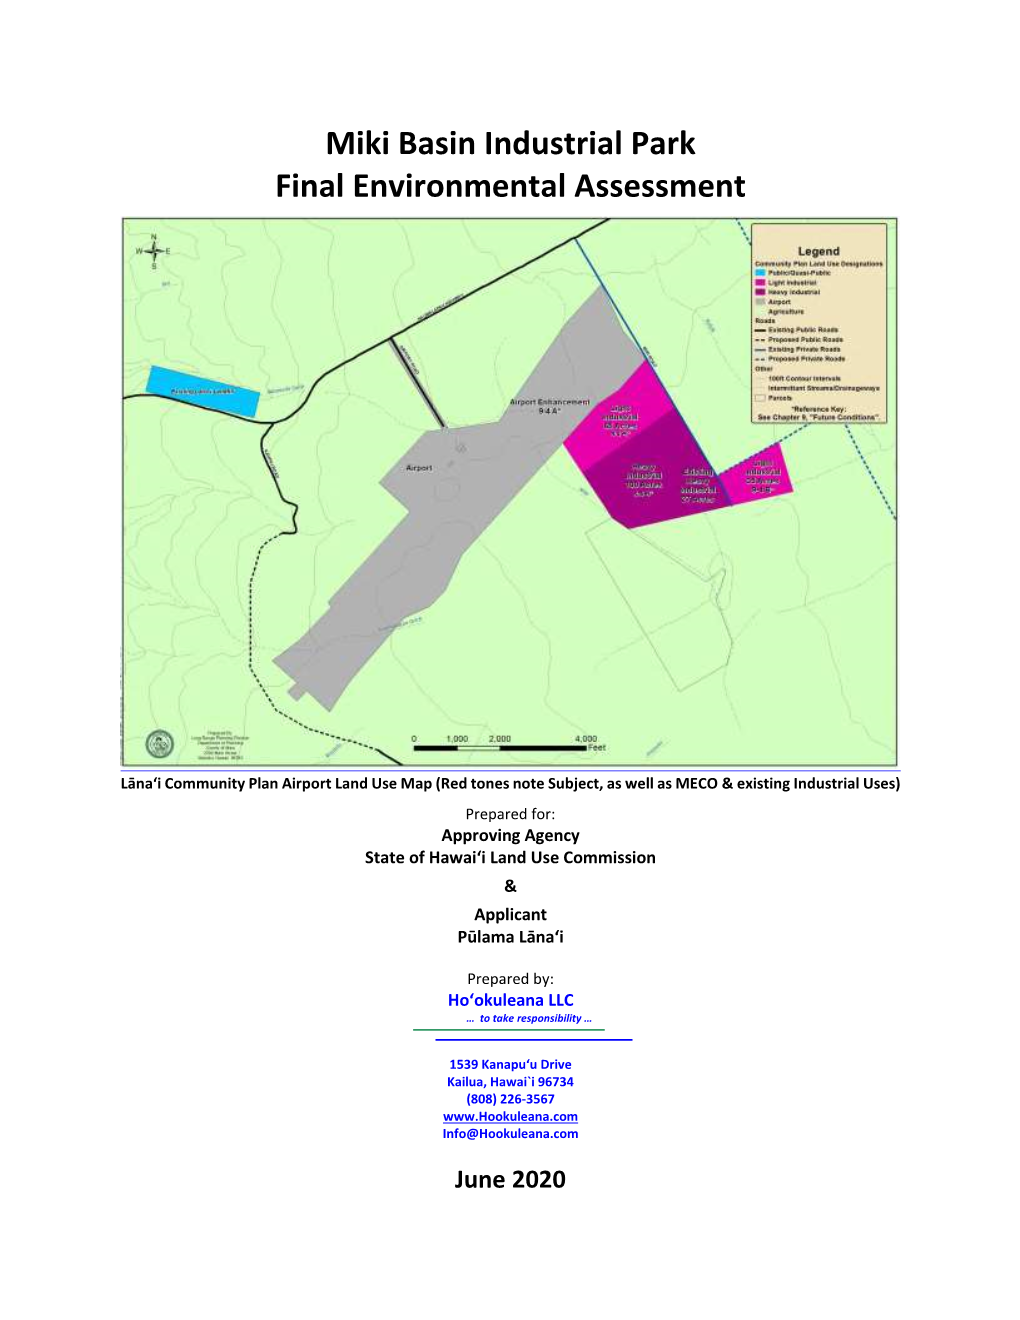 Miki Basin Industrial Park Final Environmental Assessment